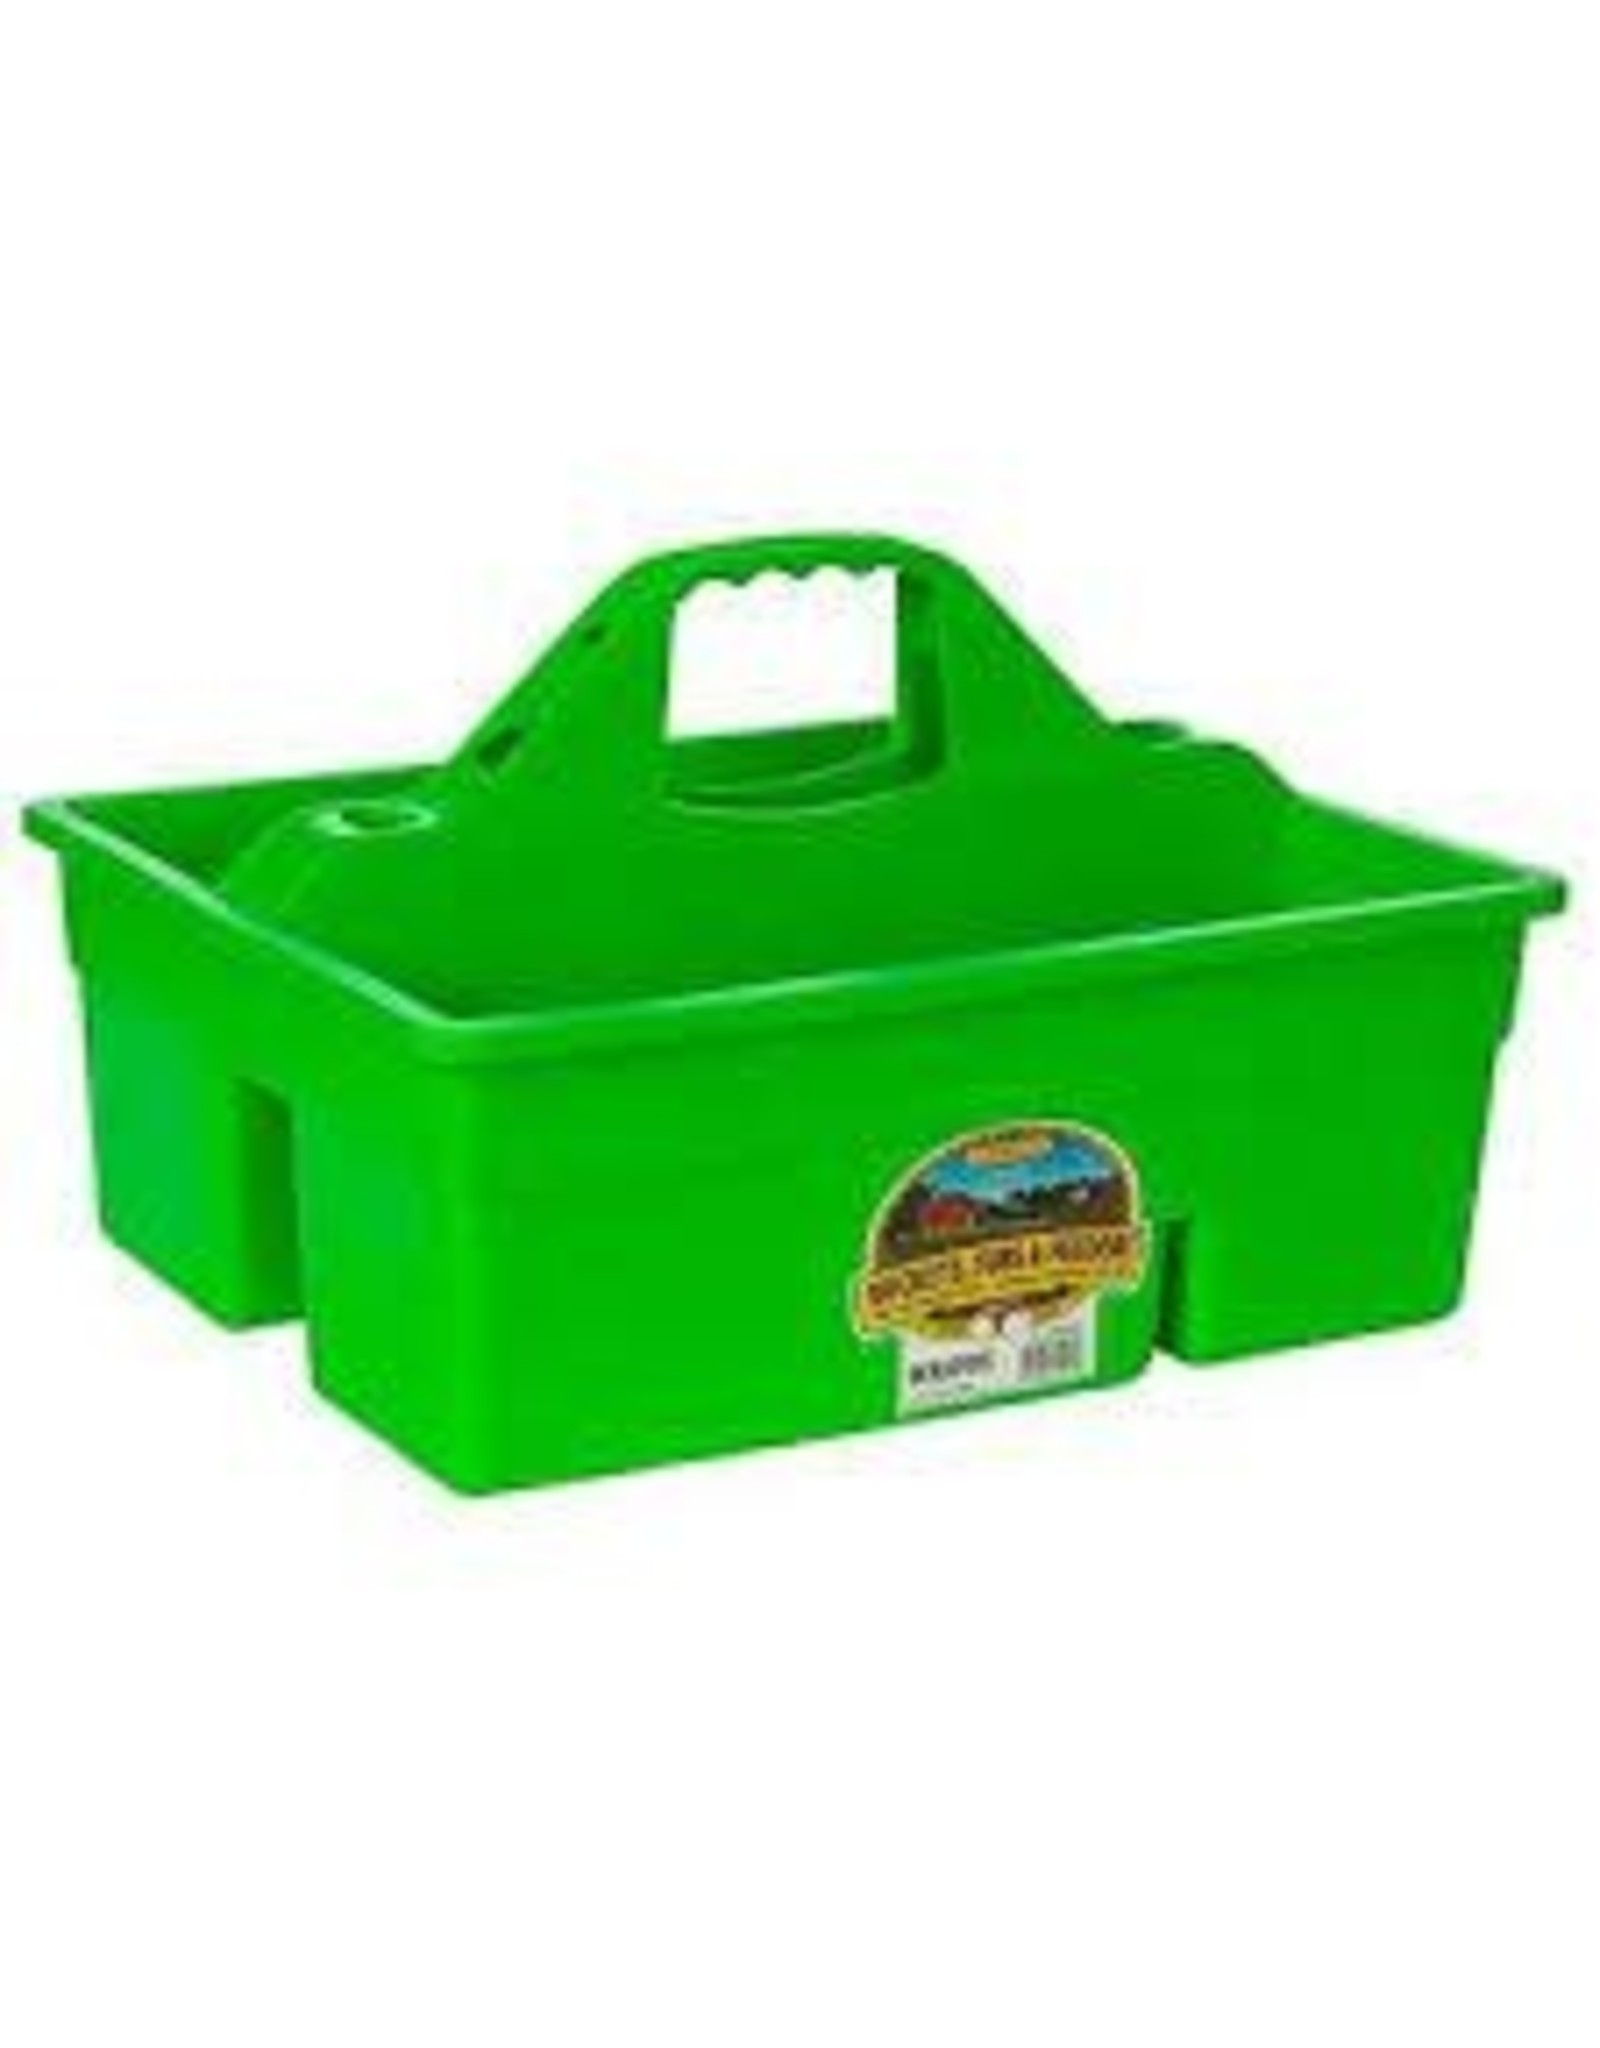 Lime Green Duratote Box - #115-659